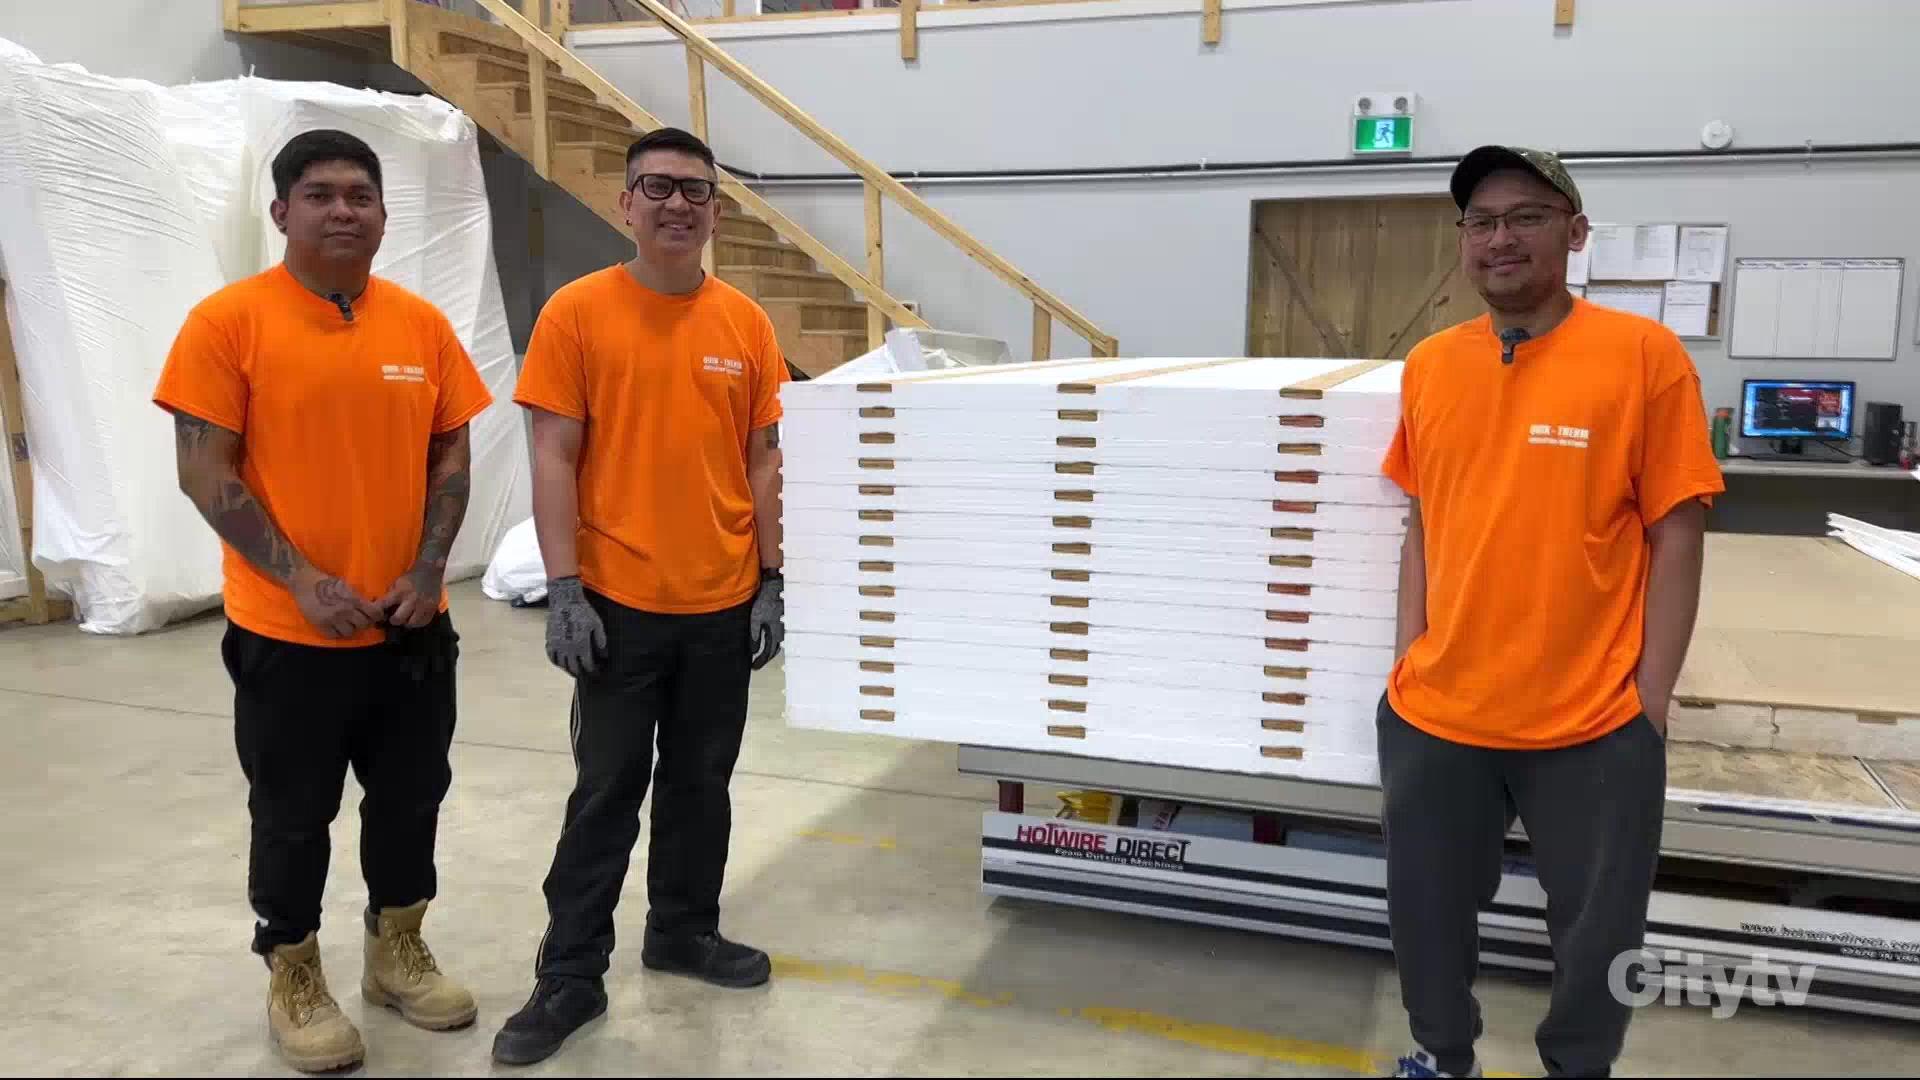 CityNews Connect: Lumber Jobs